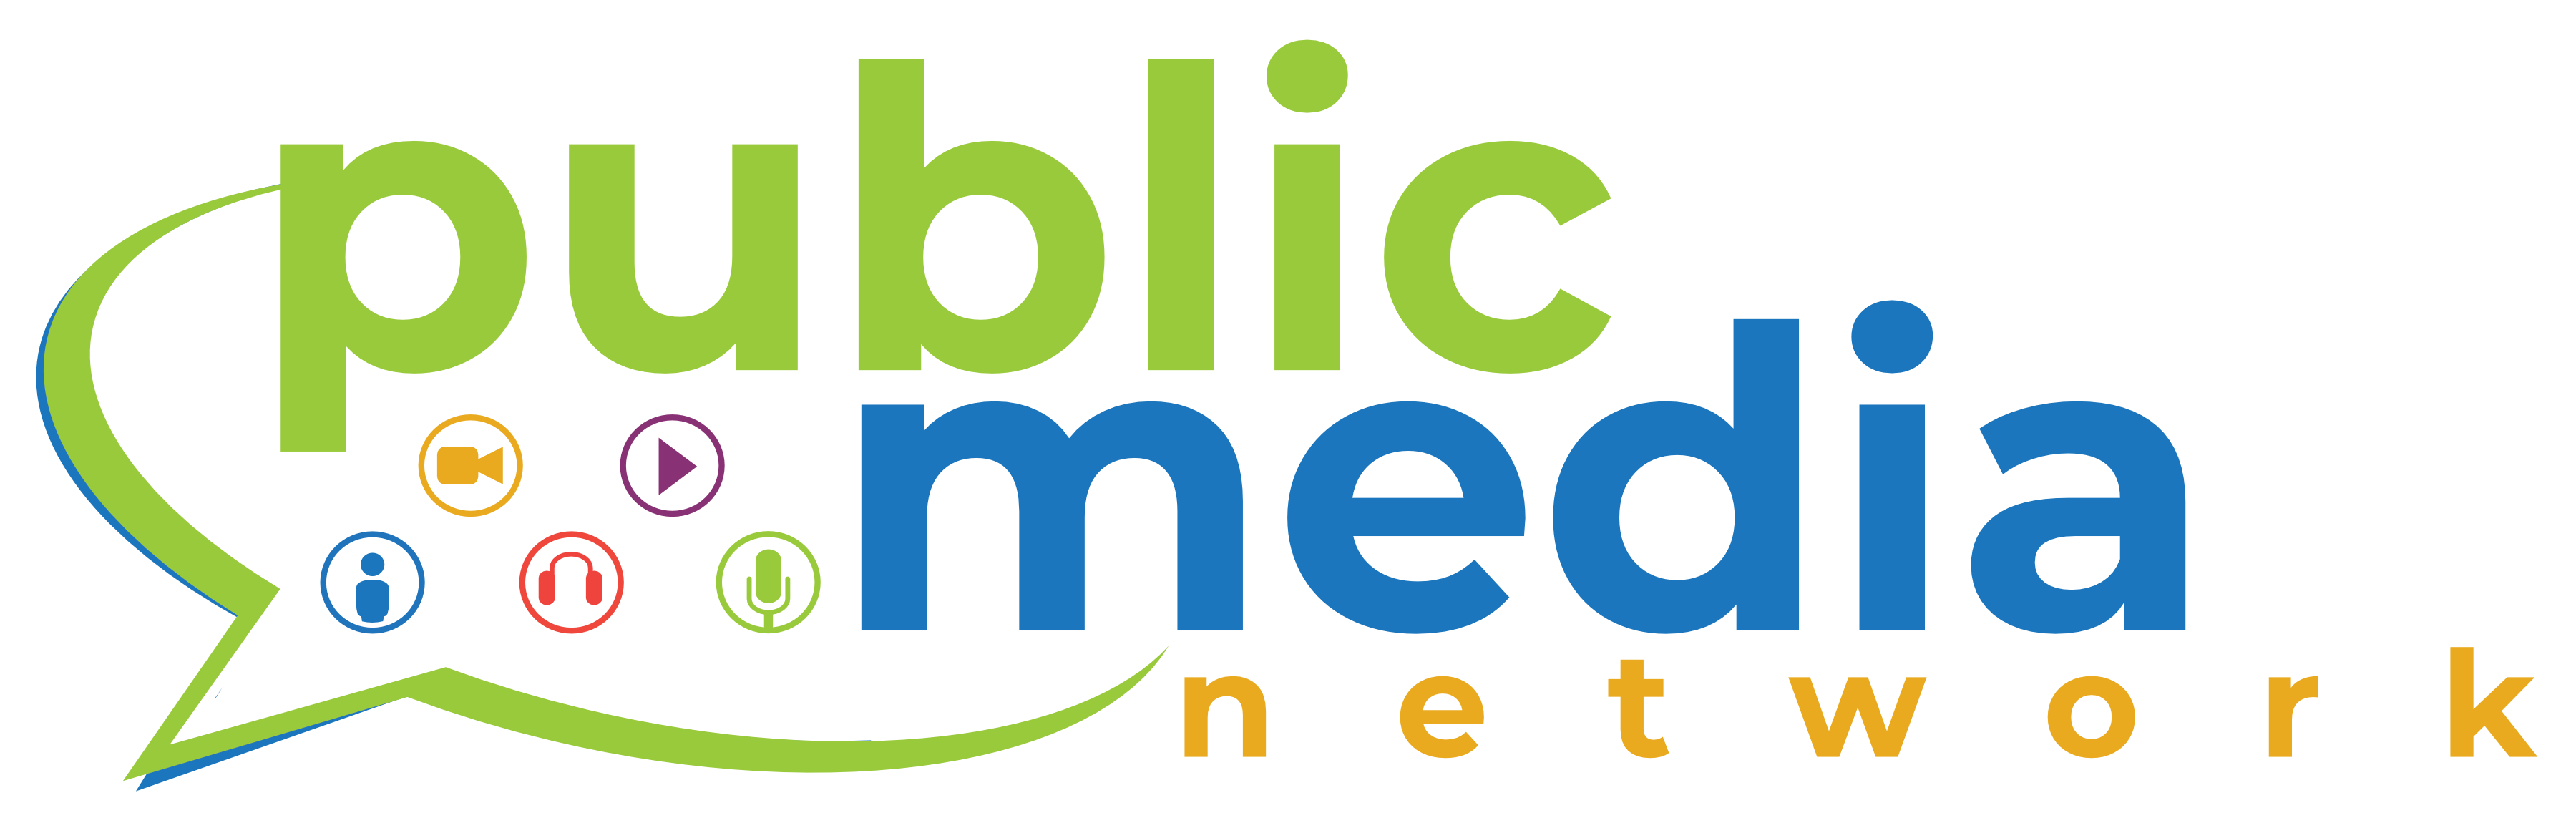 Public Media Network logo